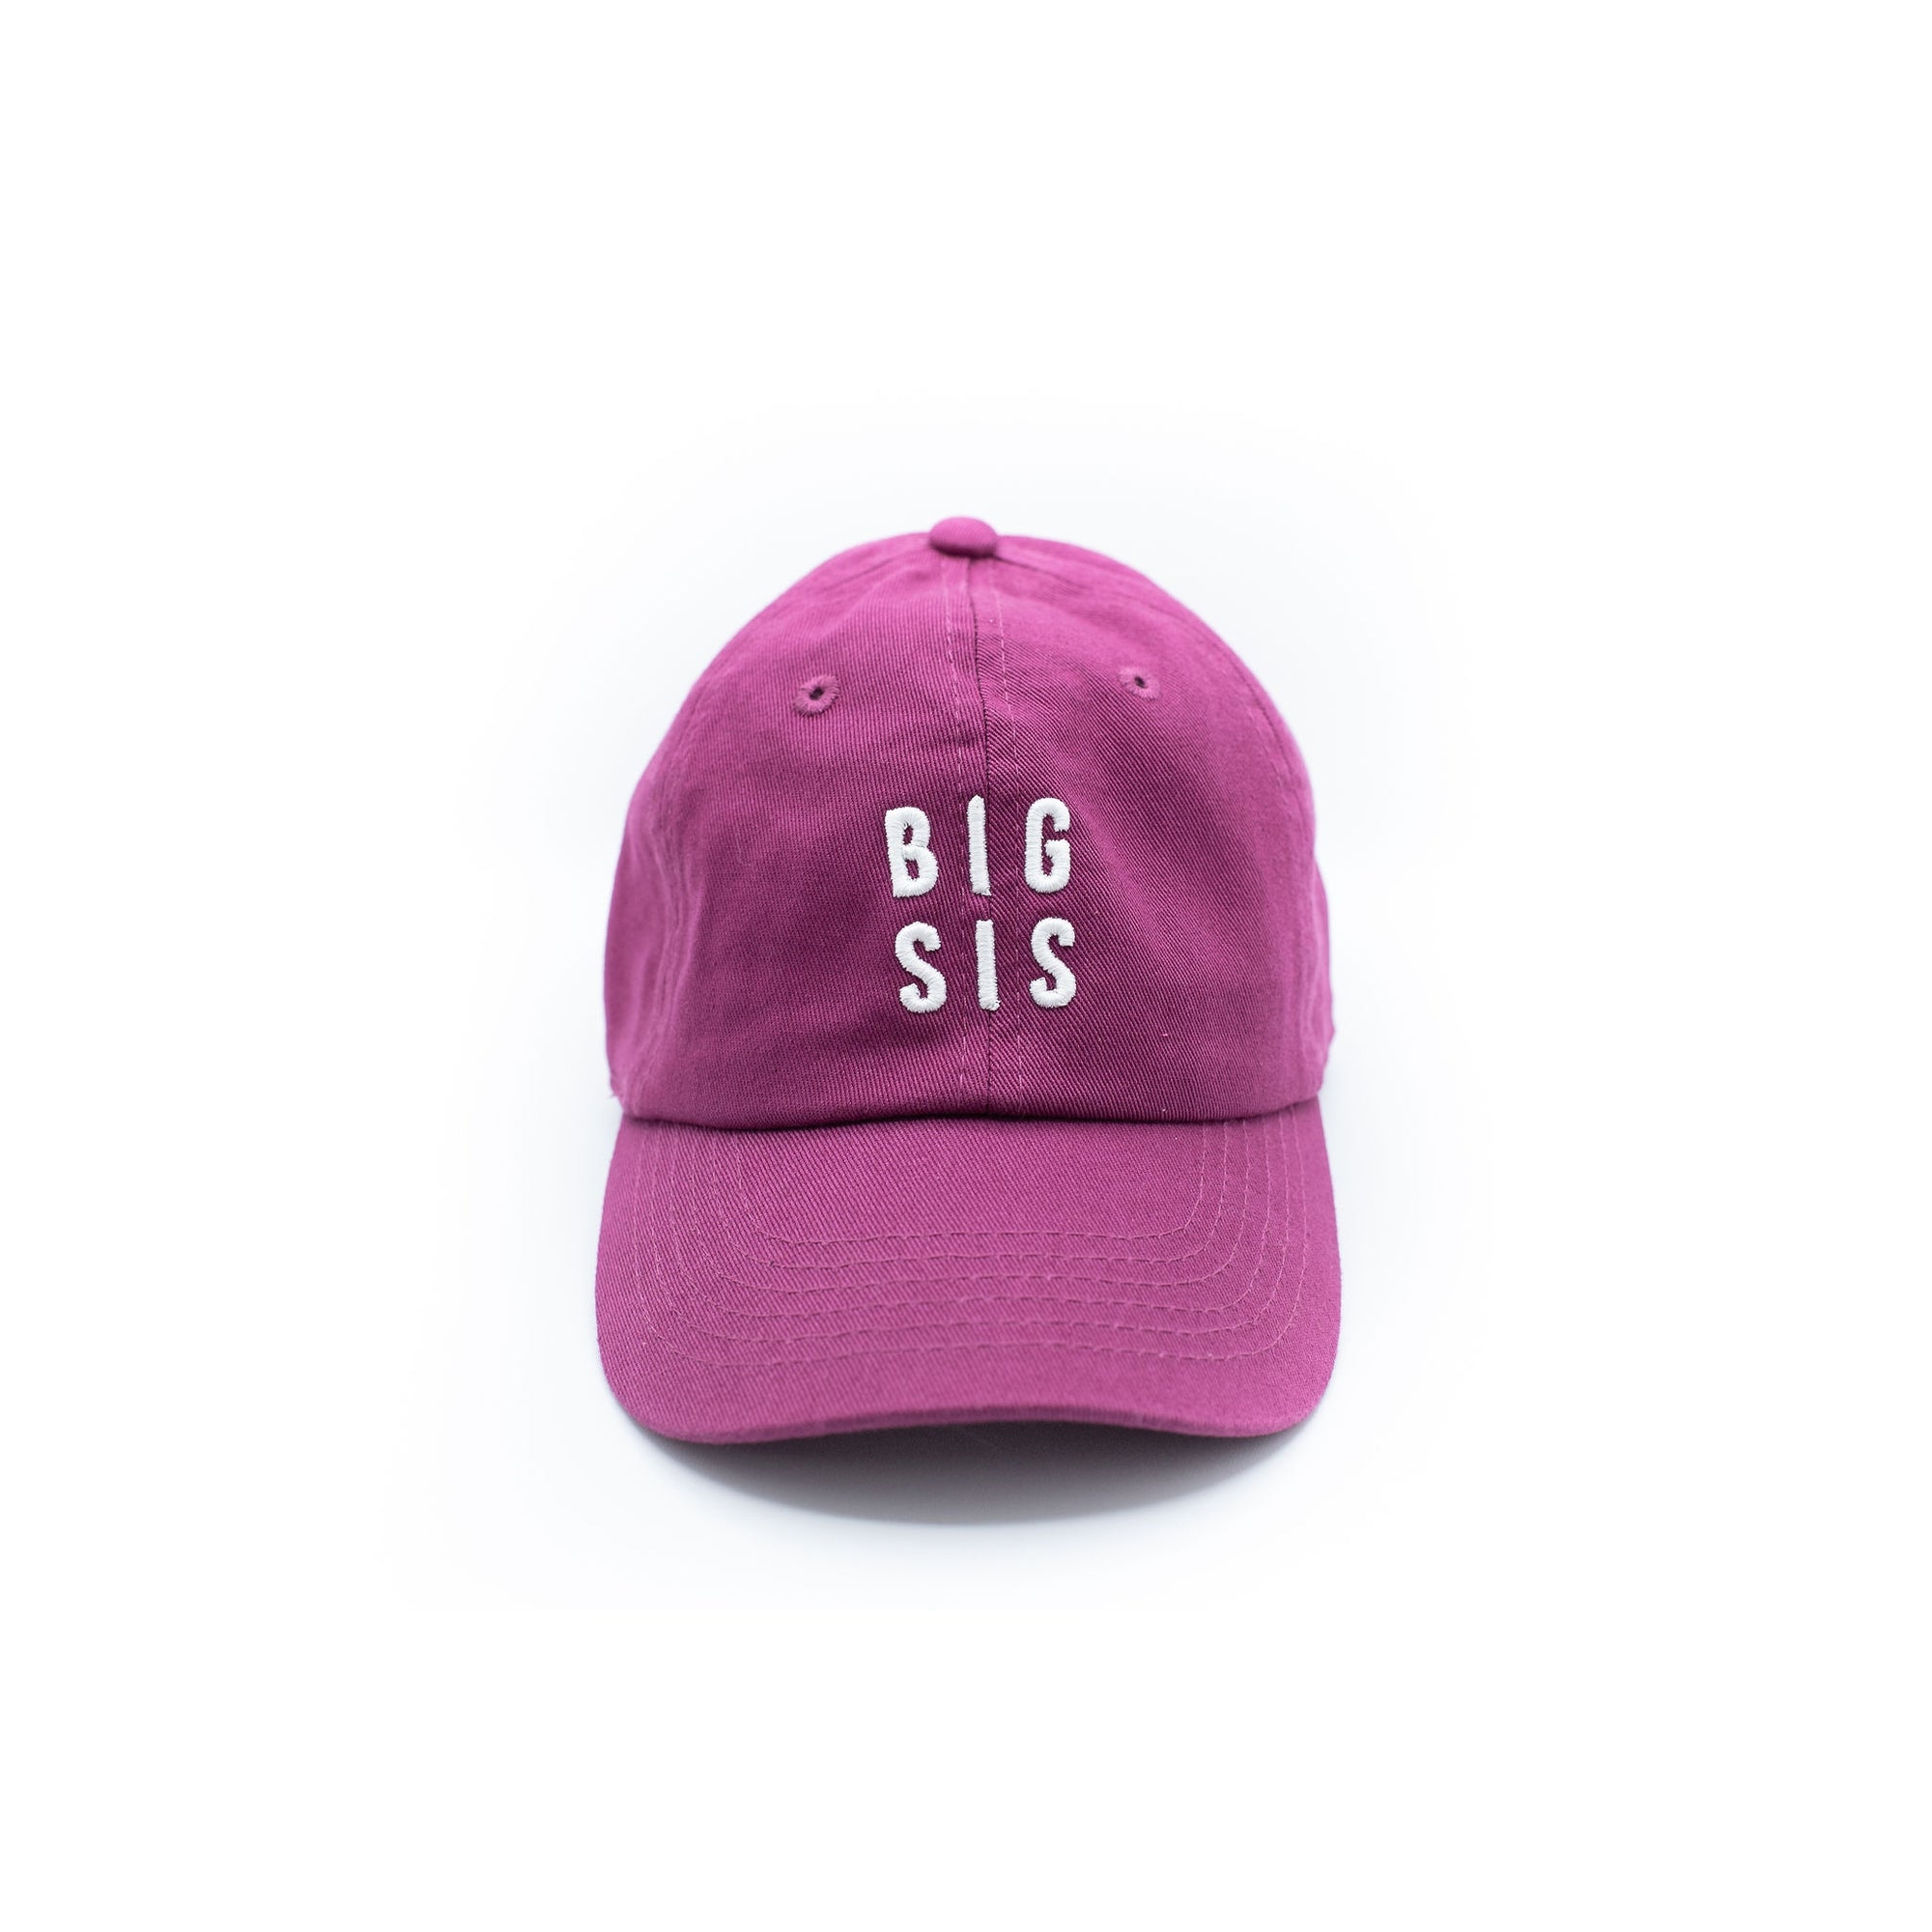 big sis hat in plum